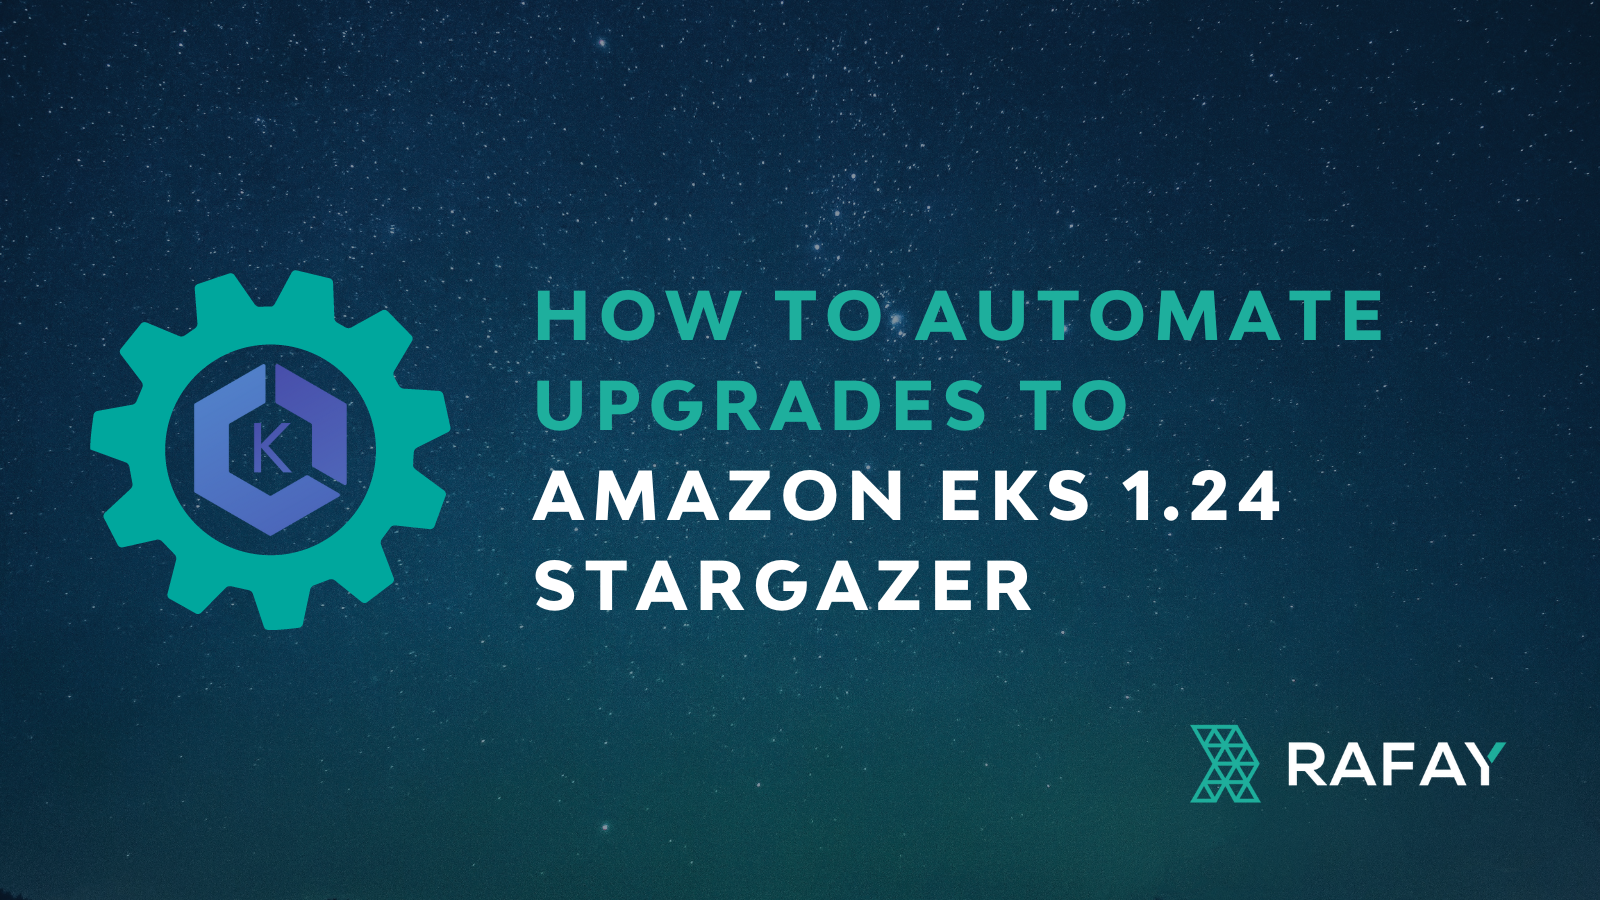 Image for How to Automate Upgrades to Amazon EKS 1.24 Stargazer